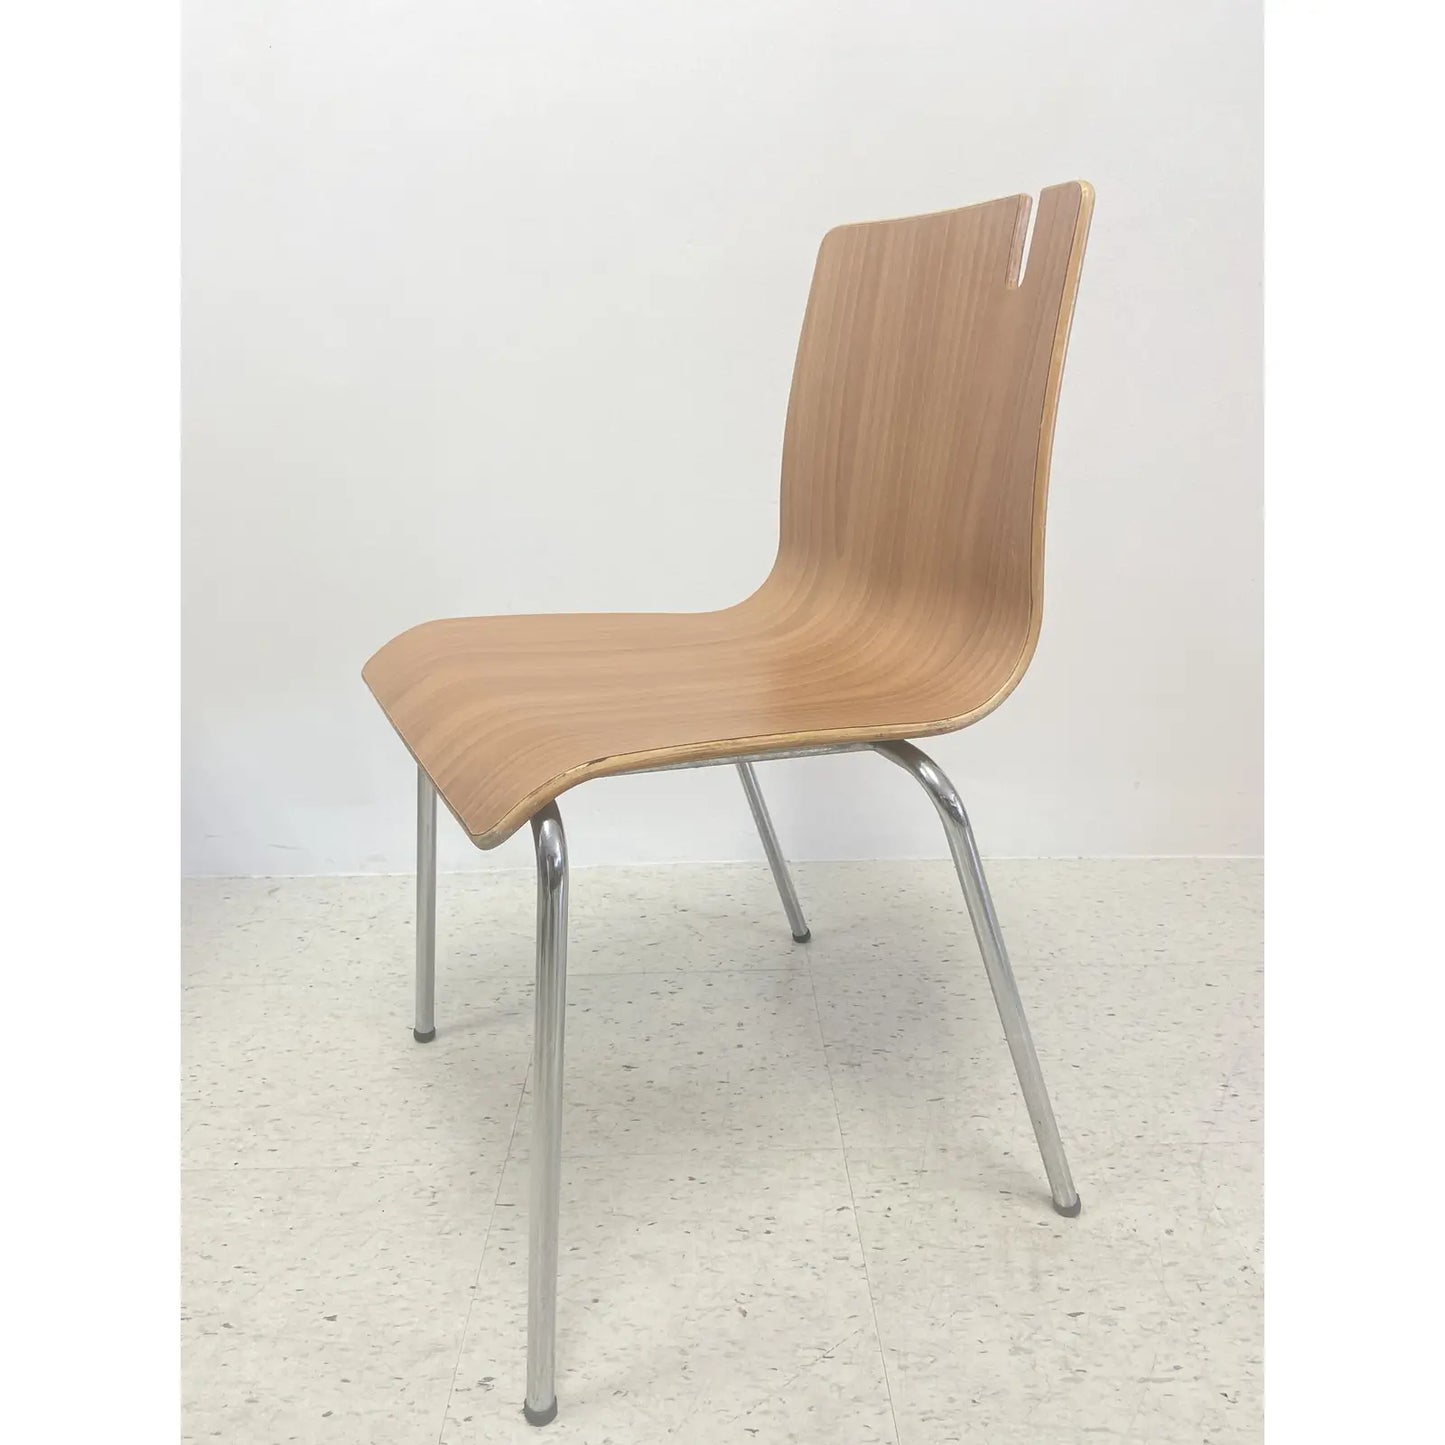 Vintage Stackable Cafe “Purse” Chair